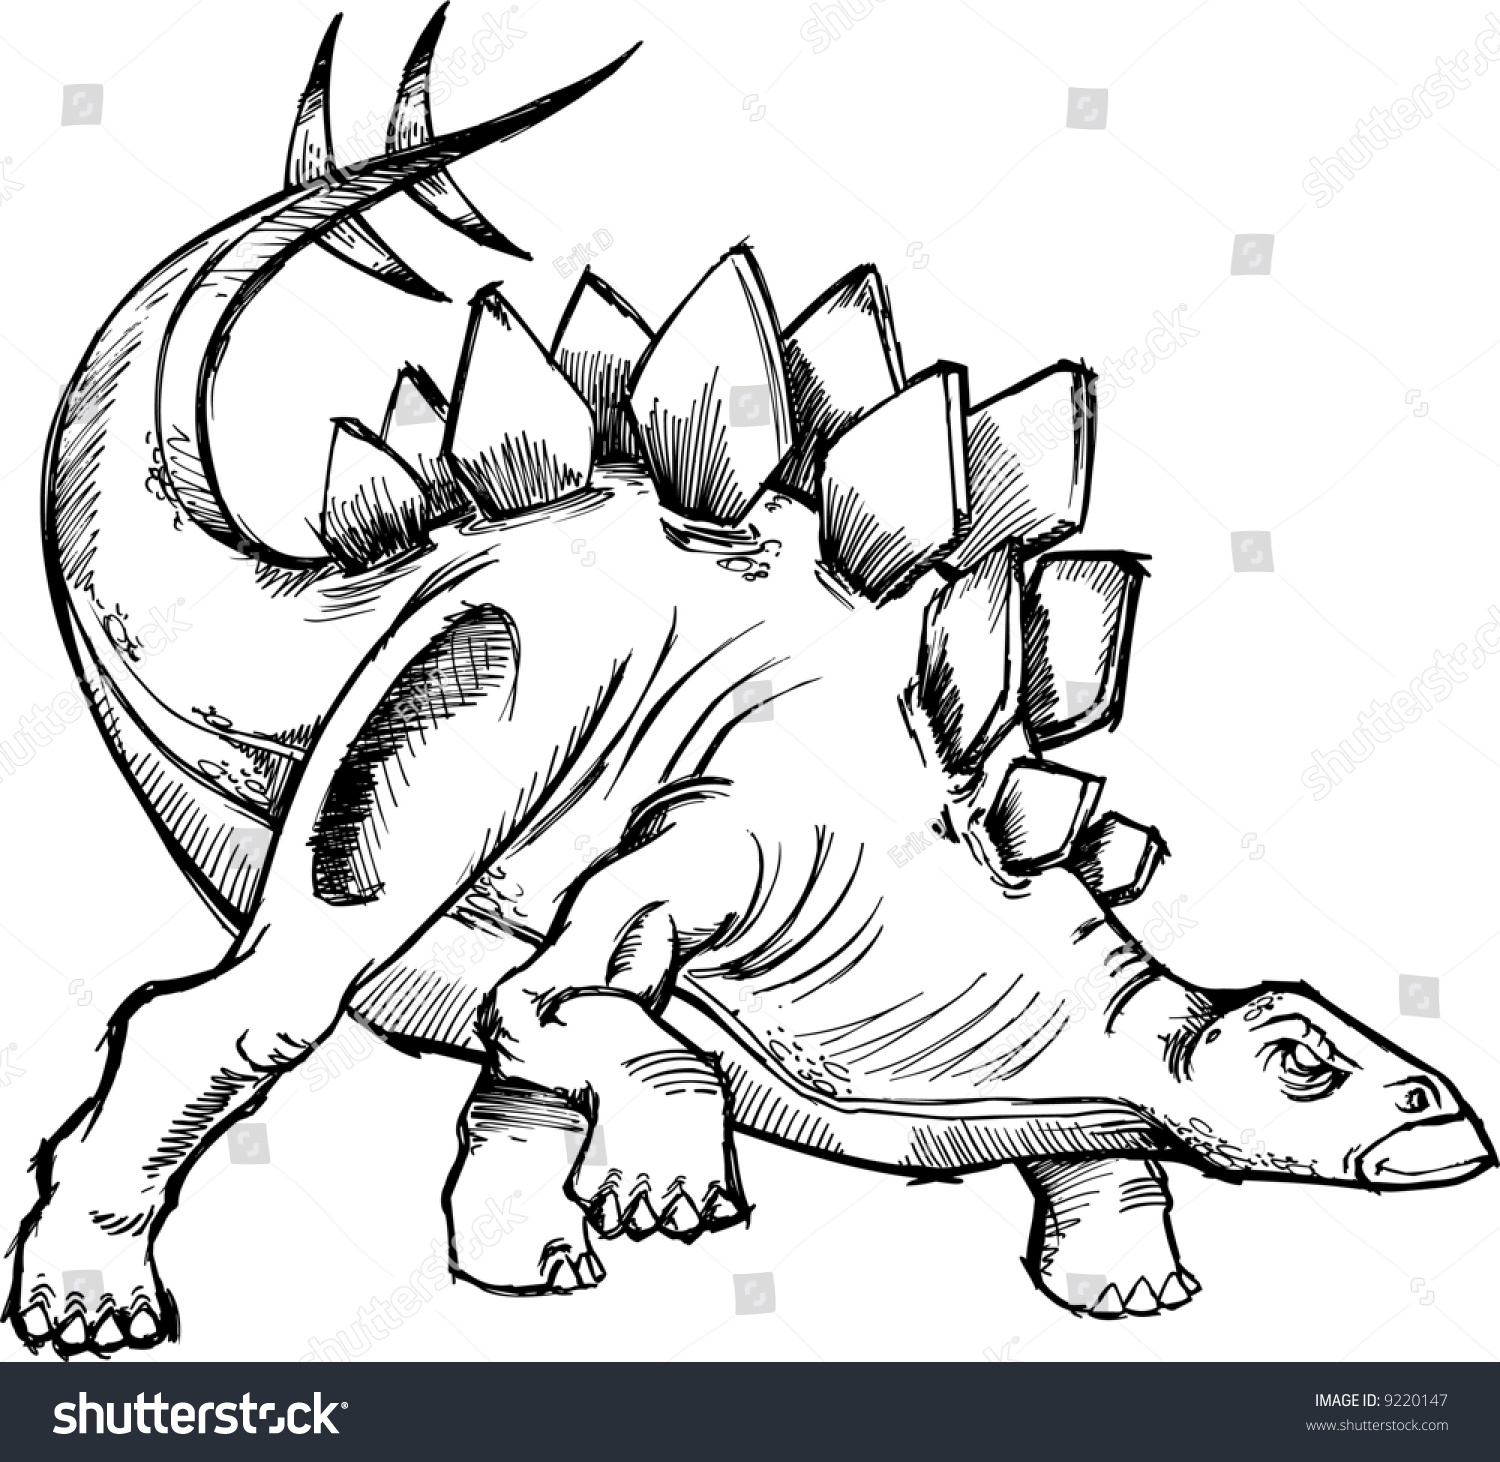 Стегозавр эскиз